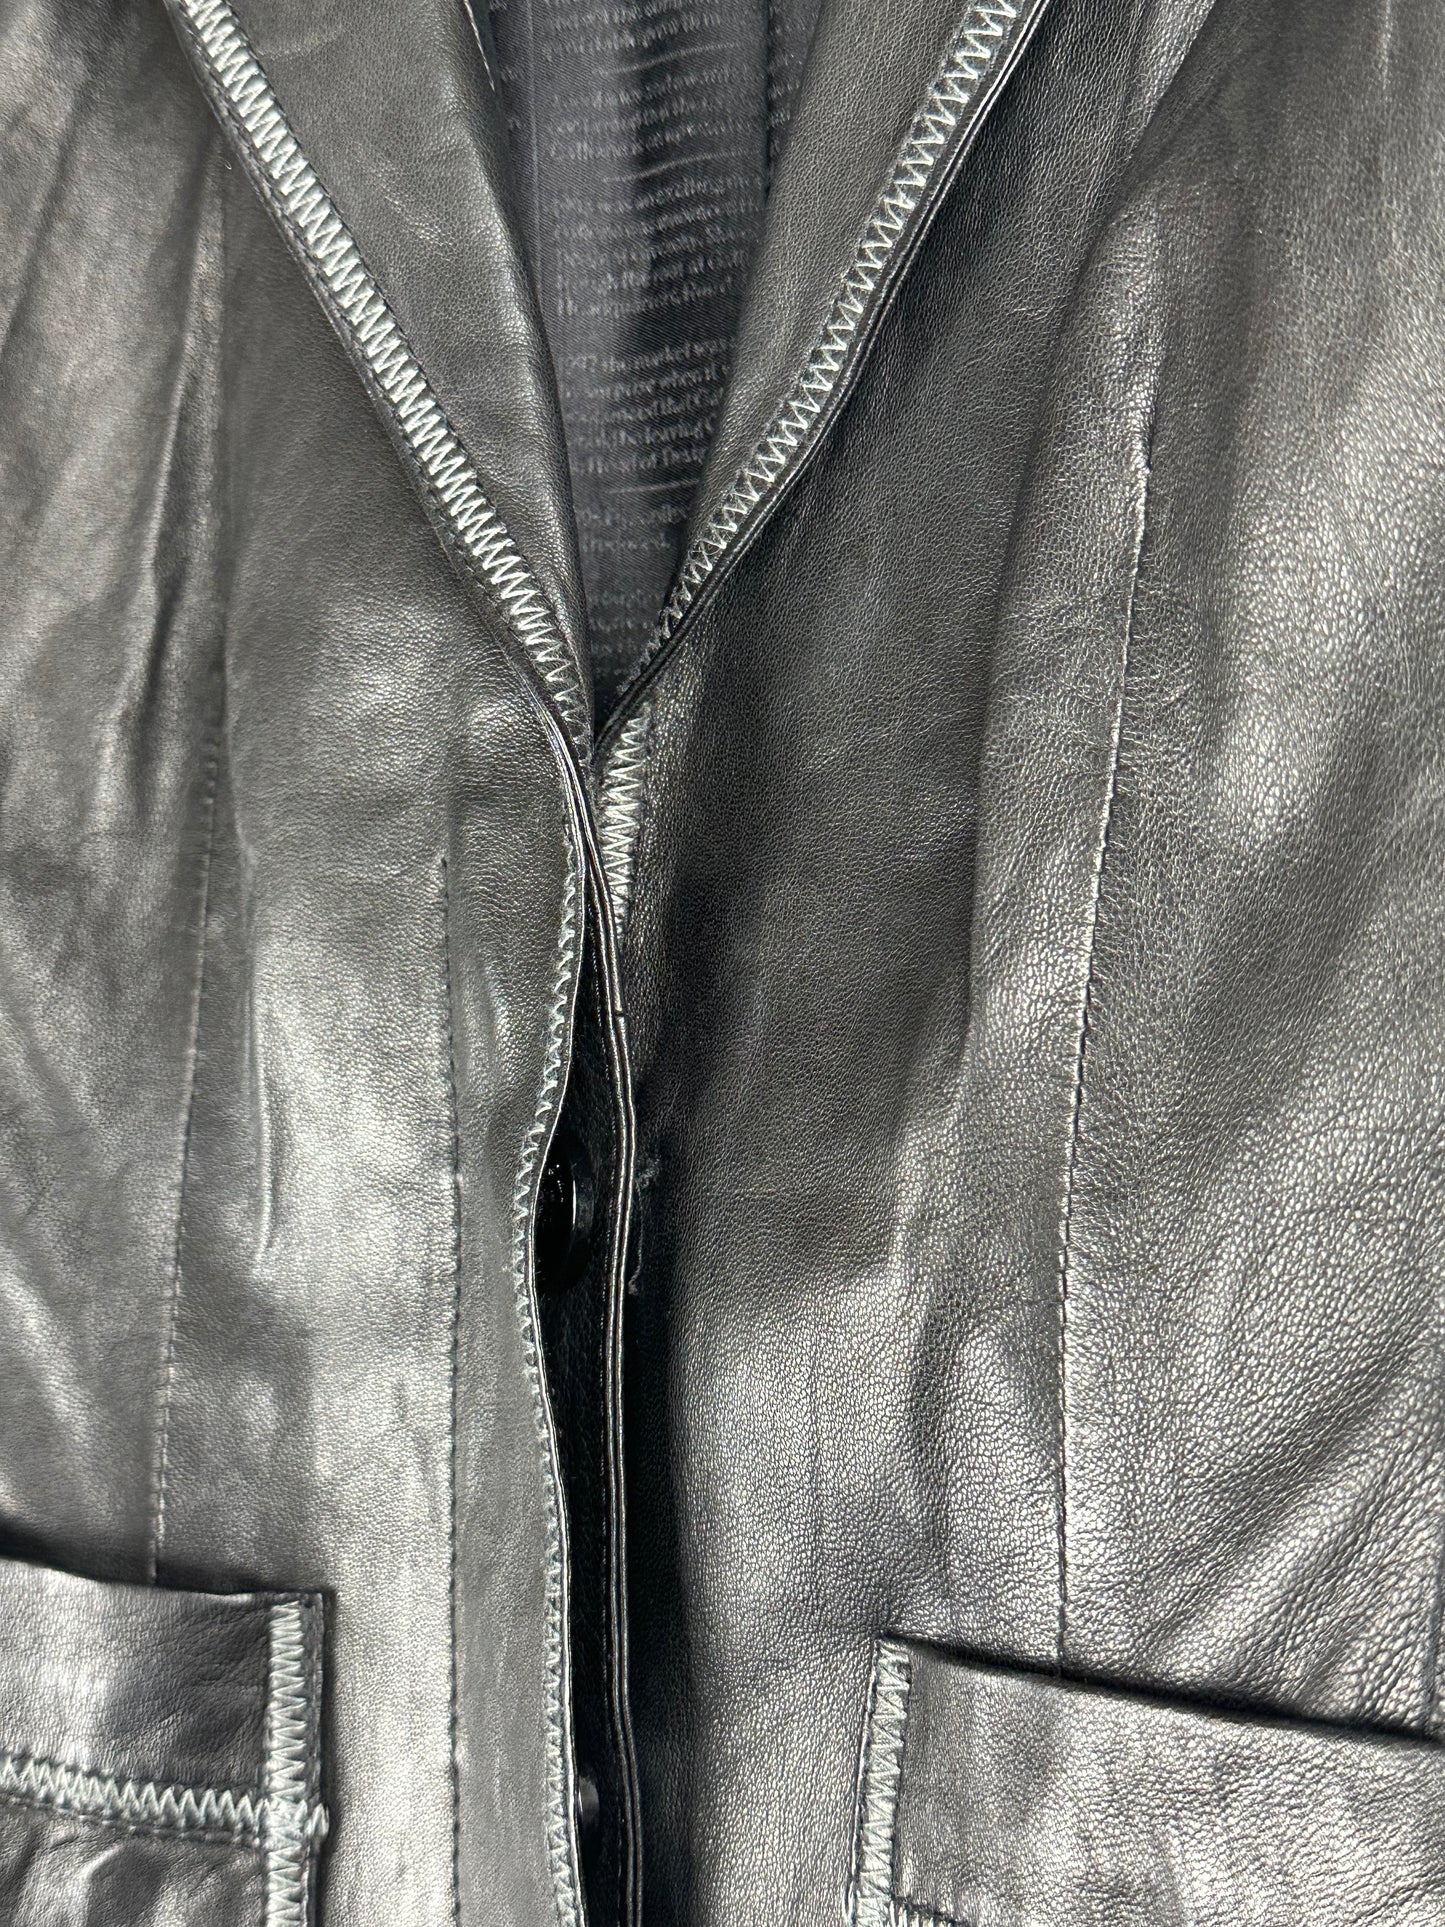 Slim Fit Leather Jacket